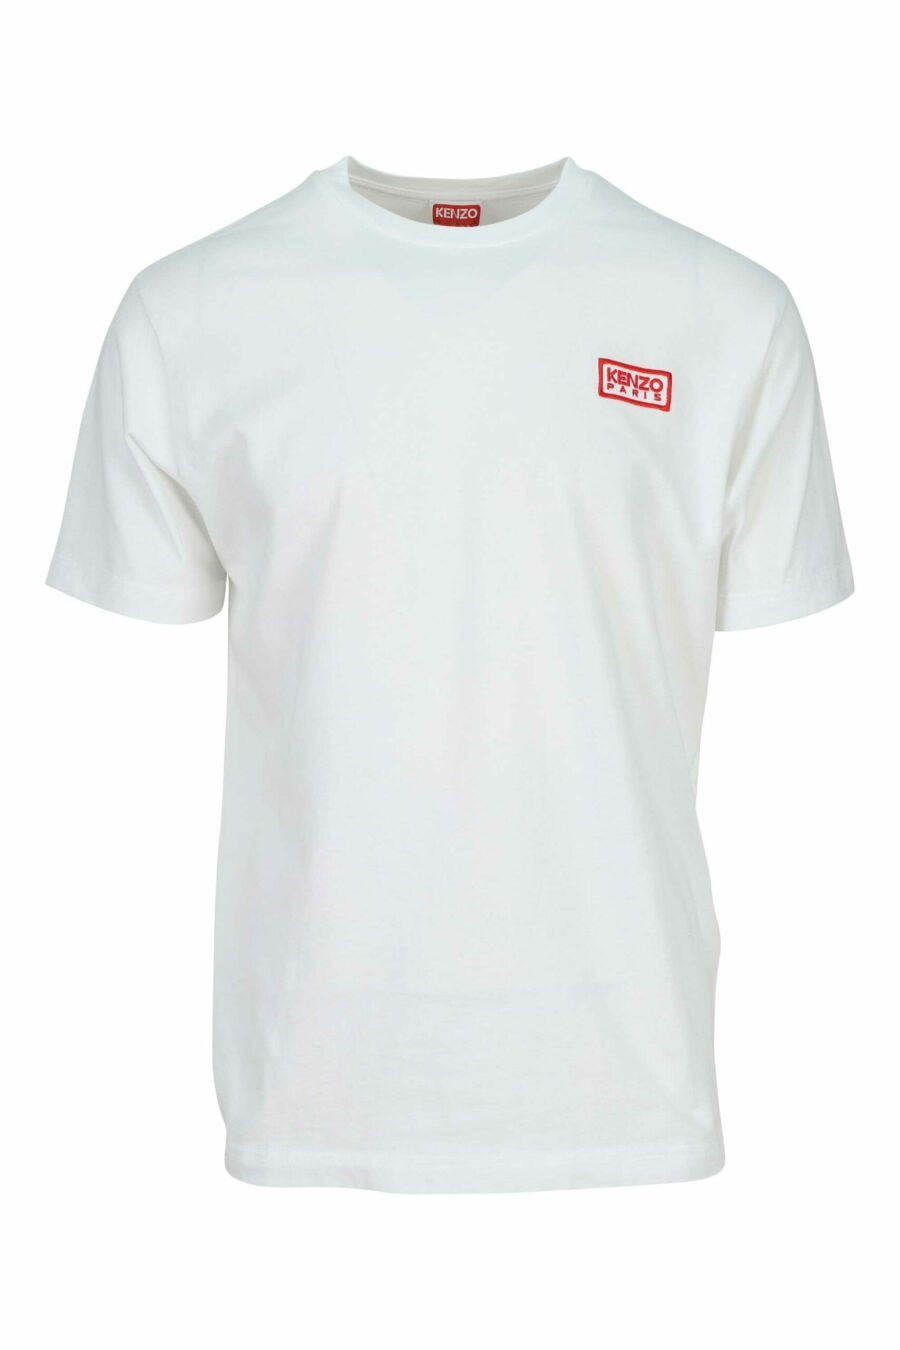 T-shirt branca com minilogo "KP classic" - 3612230624641 2 scaled